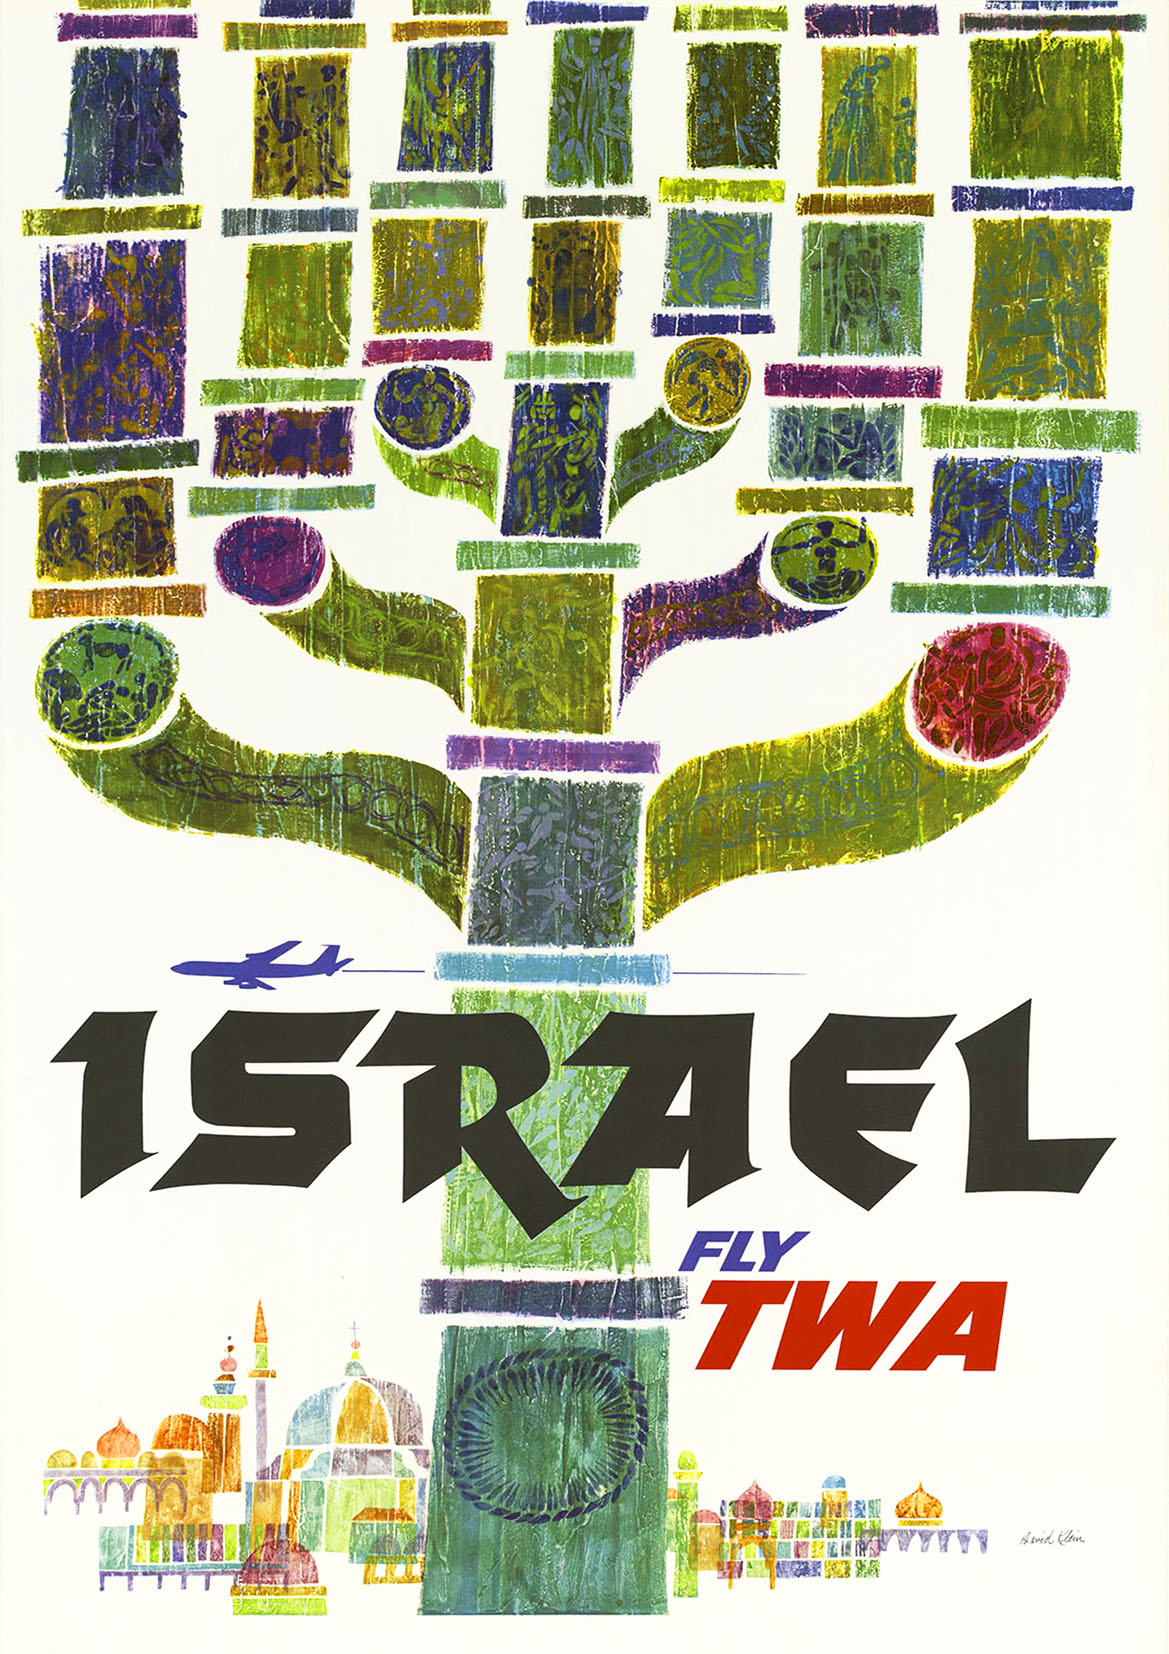 ISRAEL TRAVEL POSTER: Vintage Airline Advert Art Print